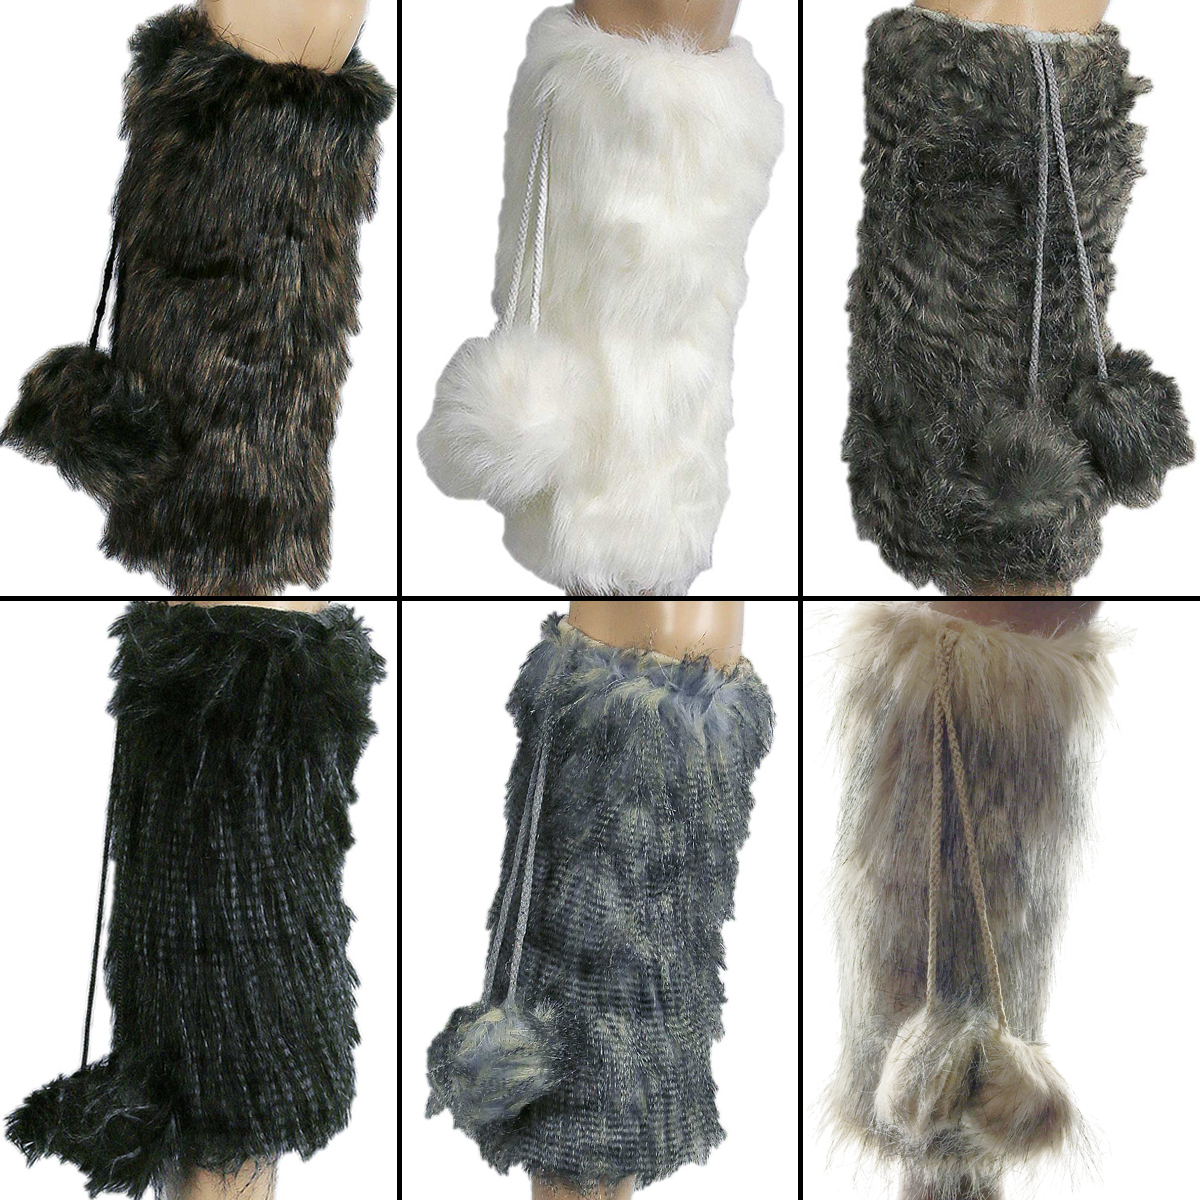 faux fur fuzzy boots